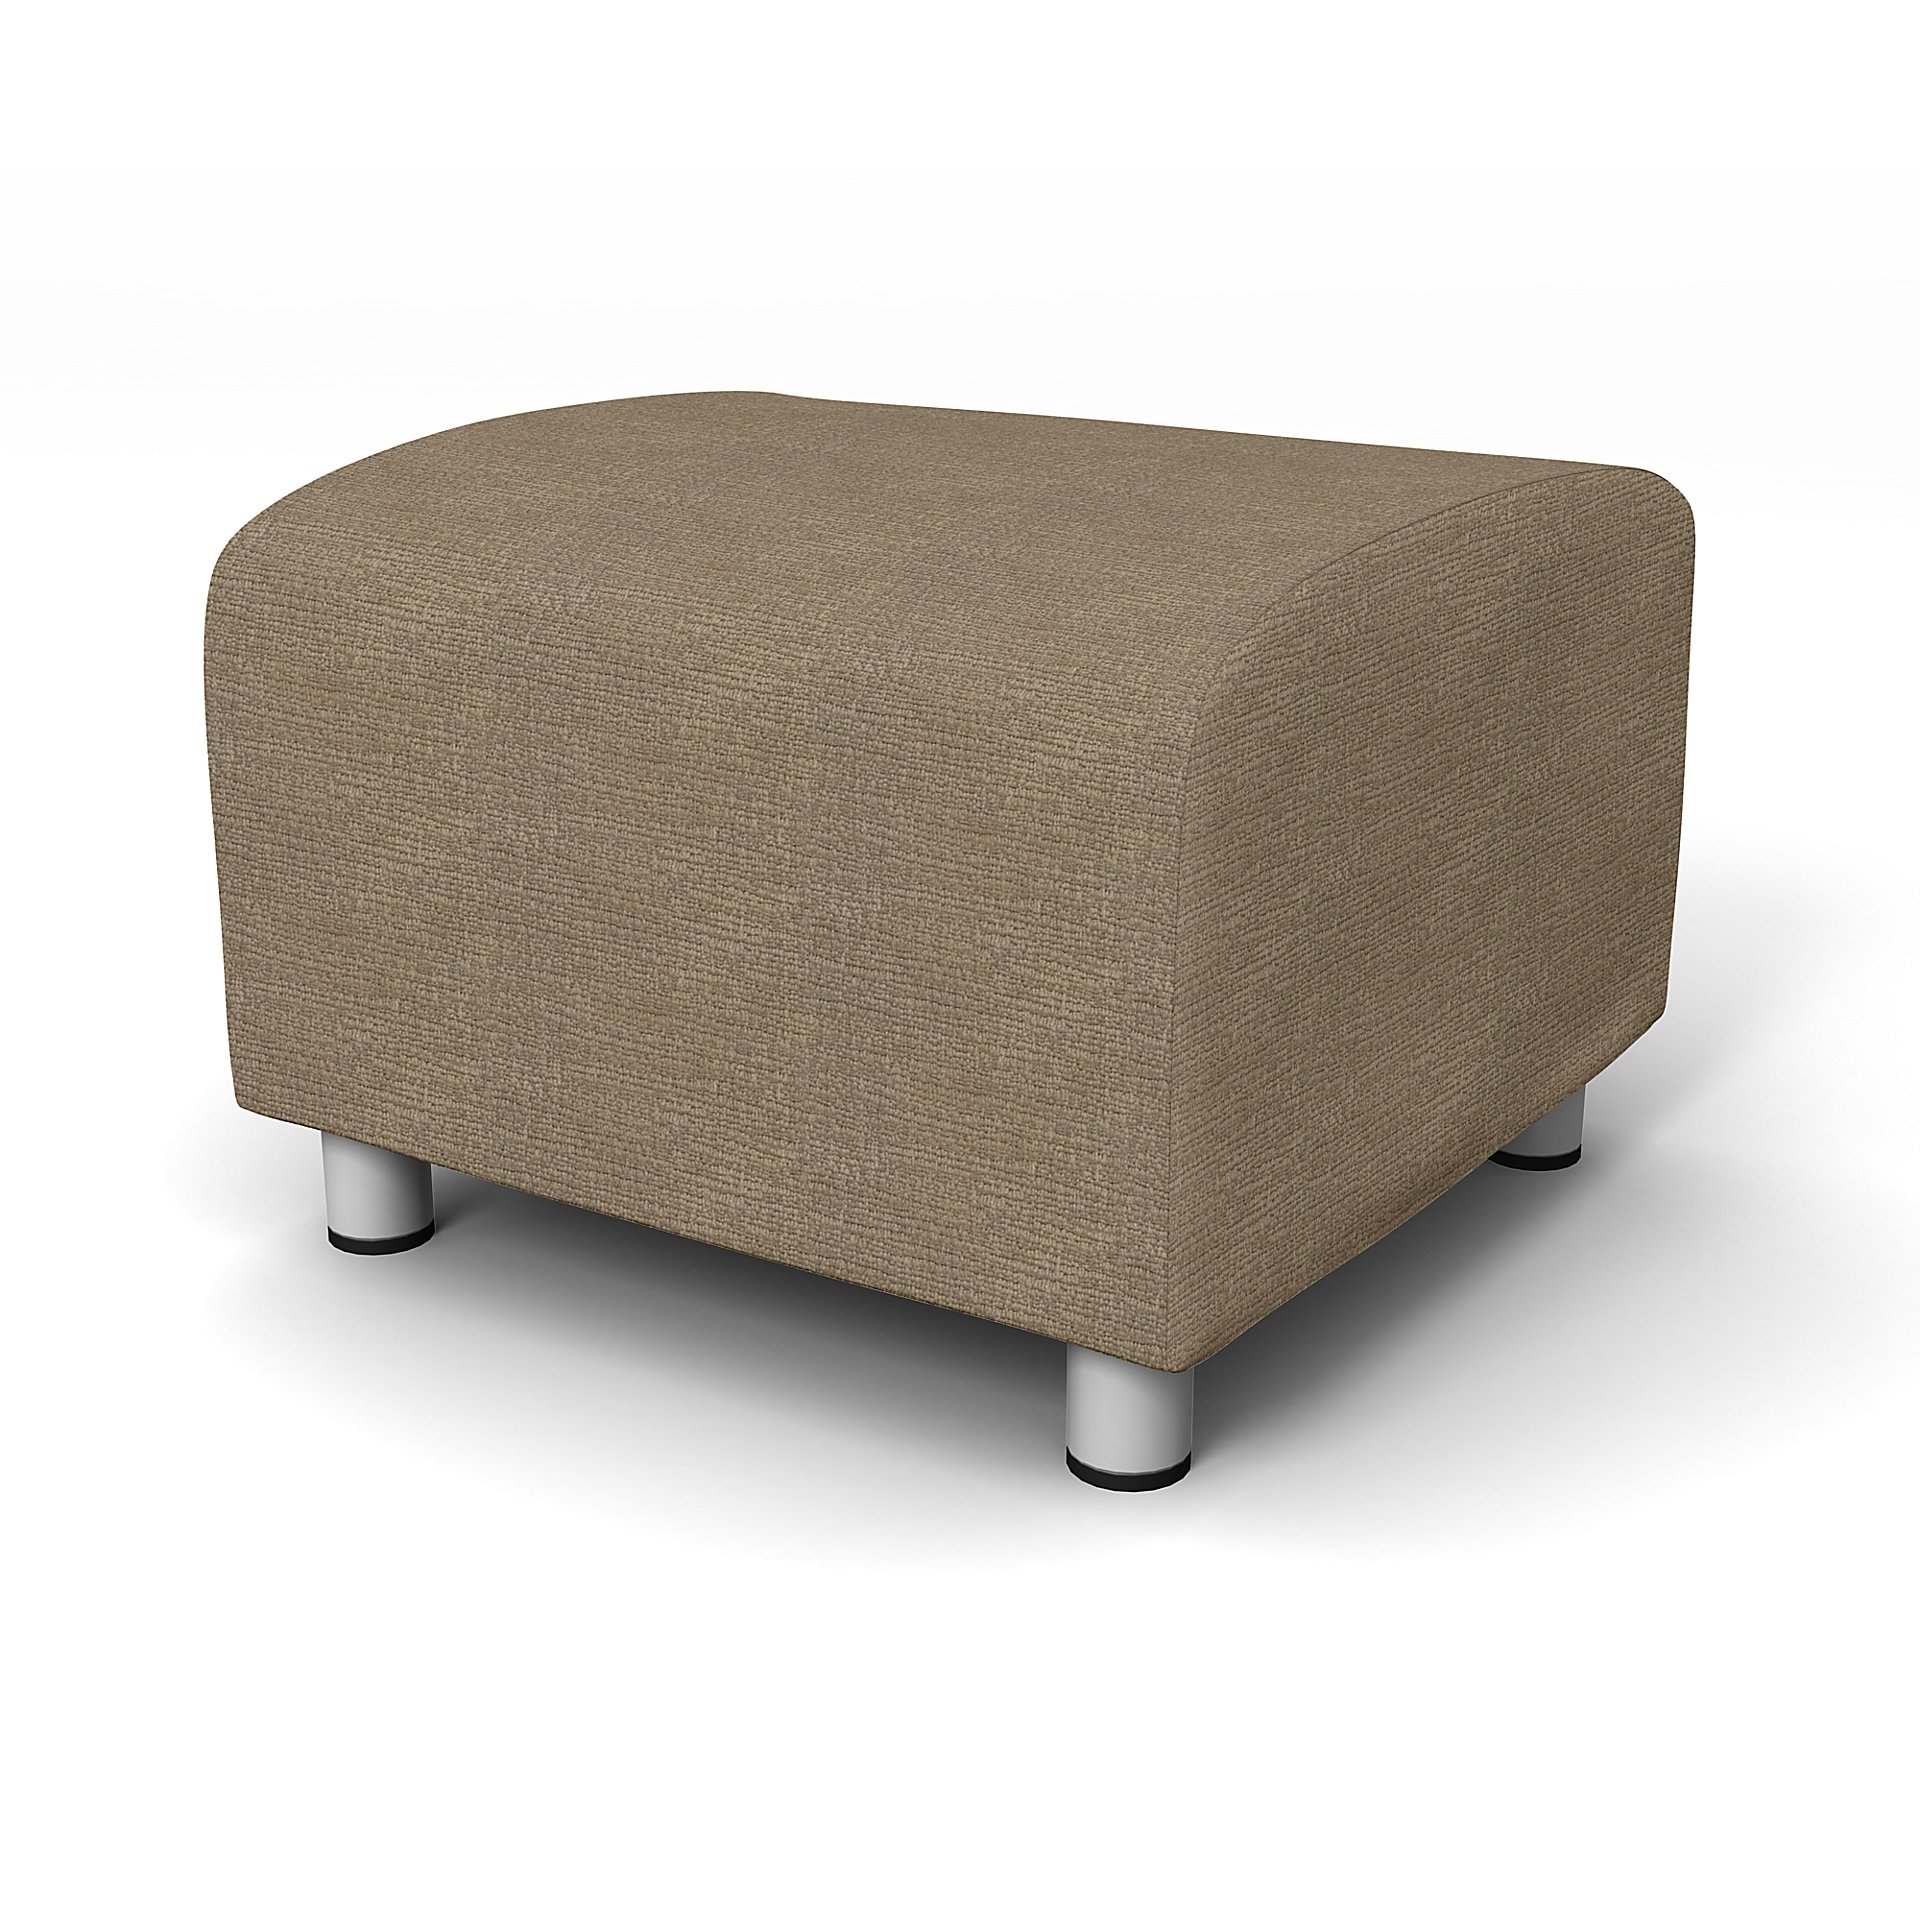 IKEA - Klippan Footstool Cover, Camel, Boucle & Texture - Bemz